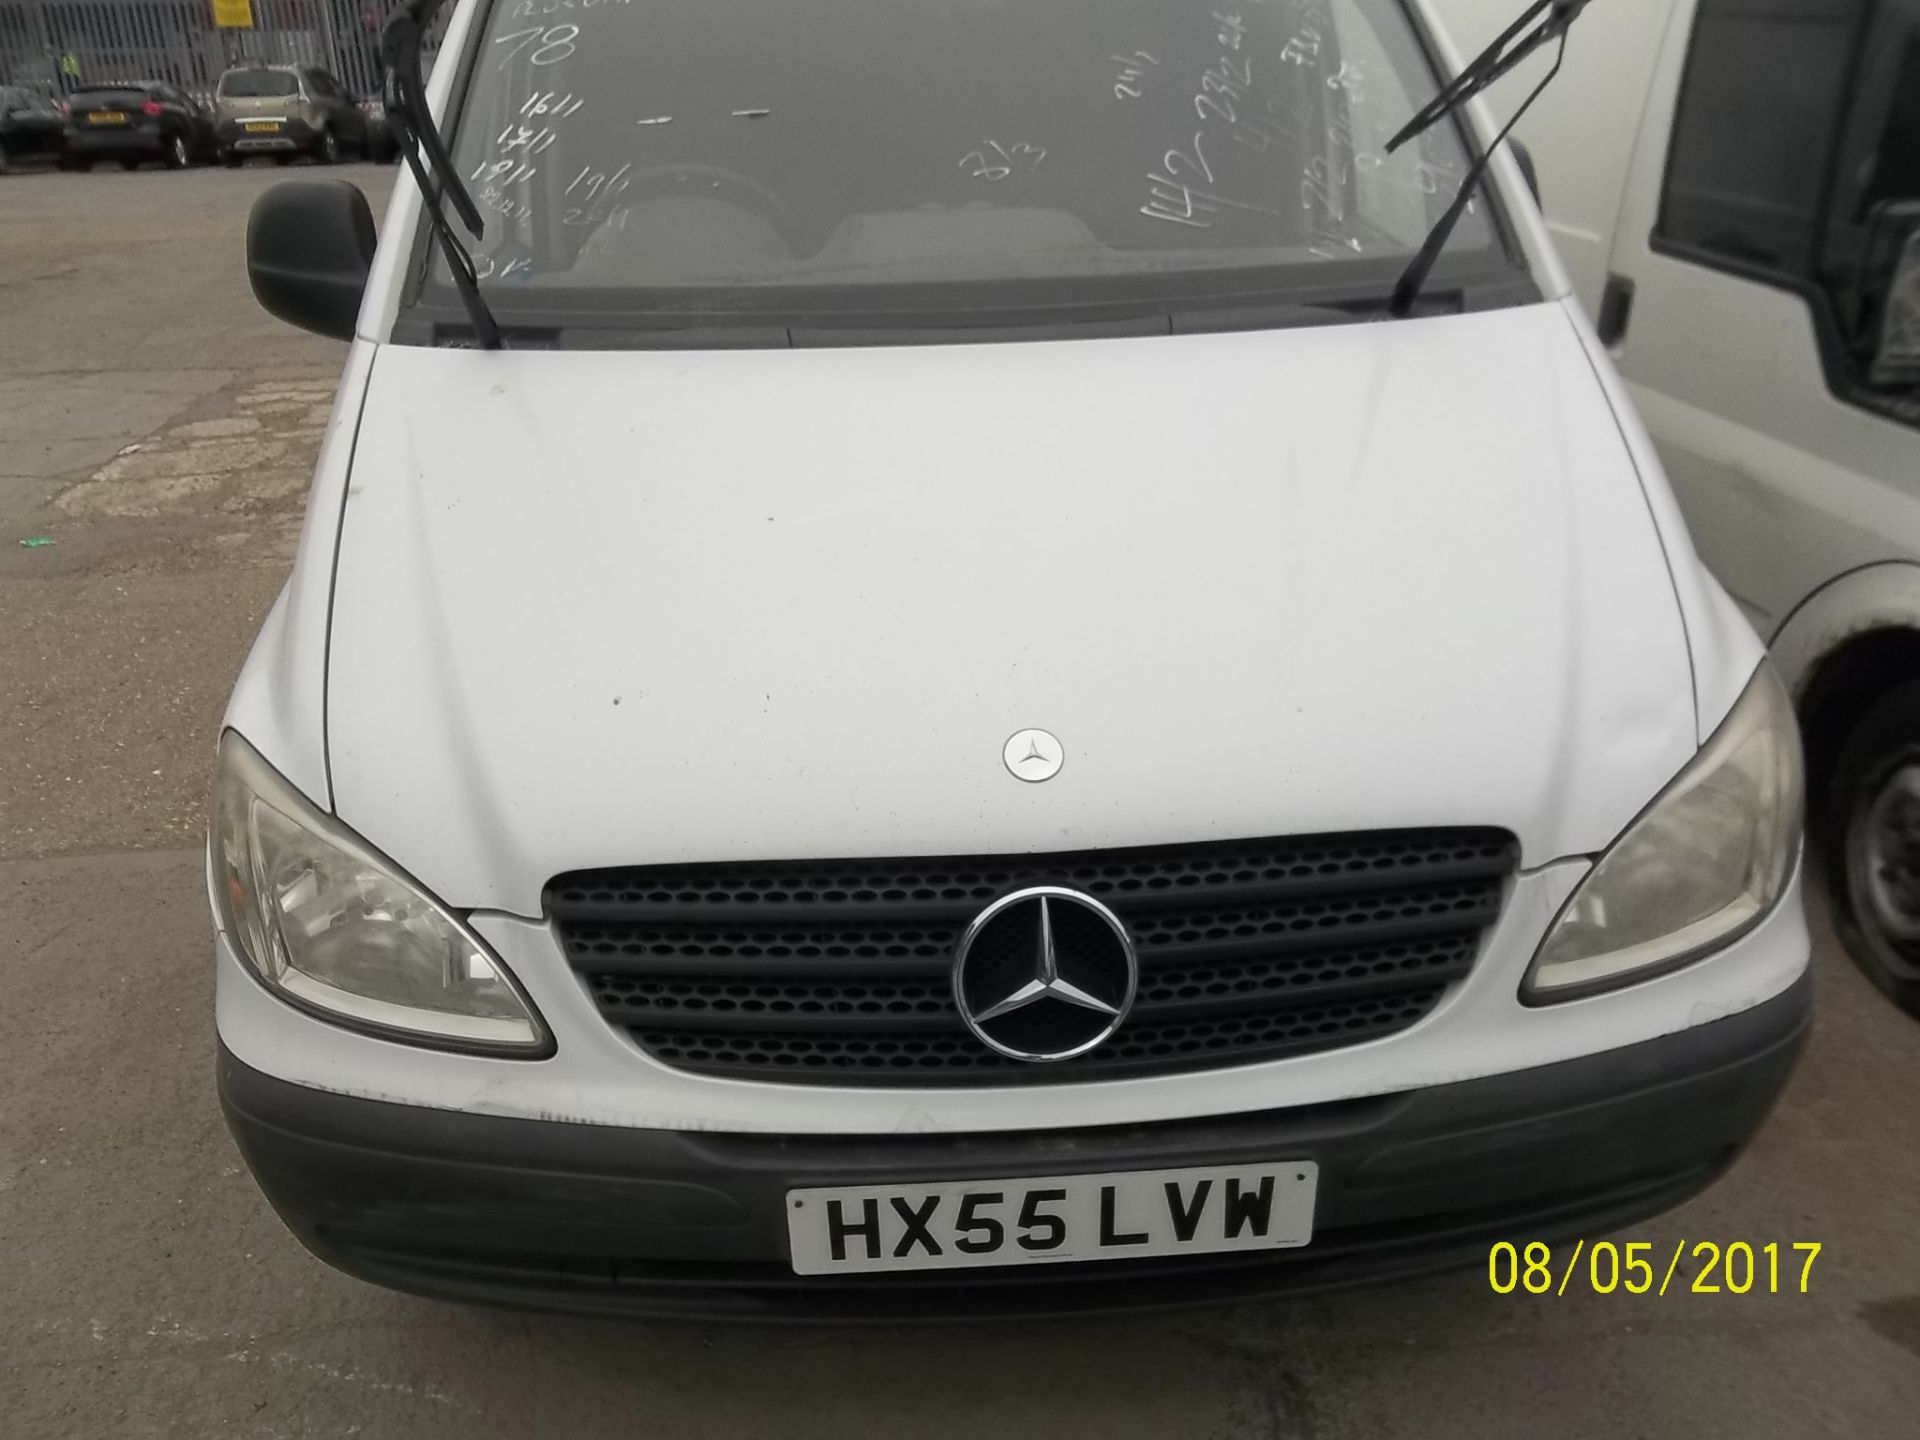 Mercedes Vito Van - HX55 LVW Date of registration: 01.10.2005 2151cc, diesel, white Odometer reading